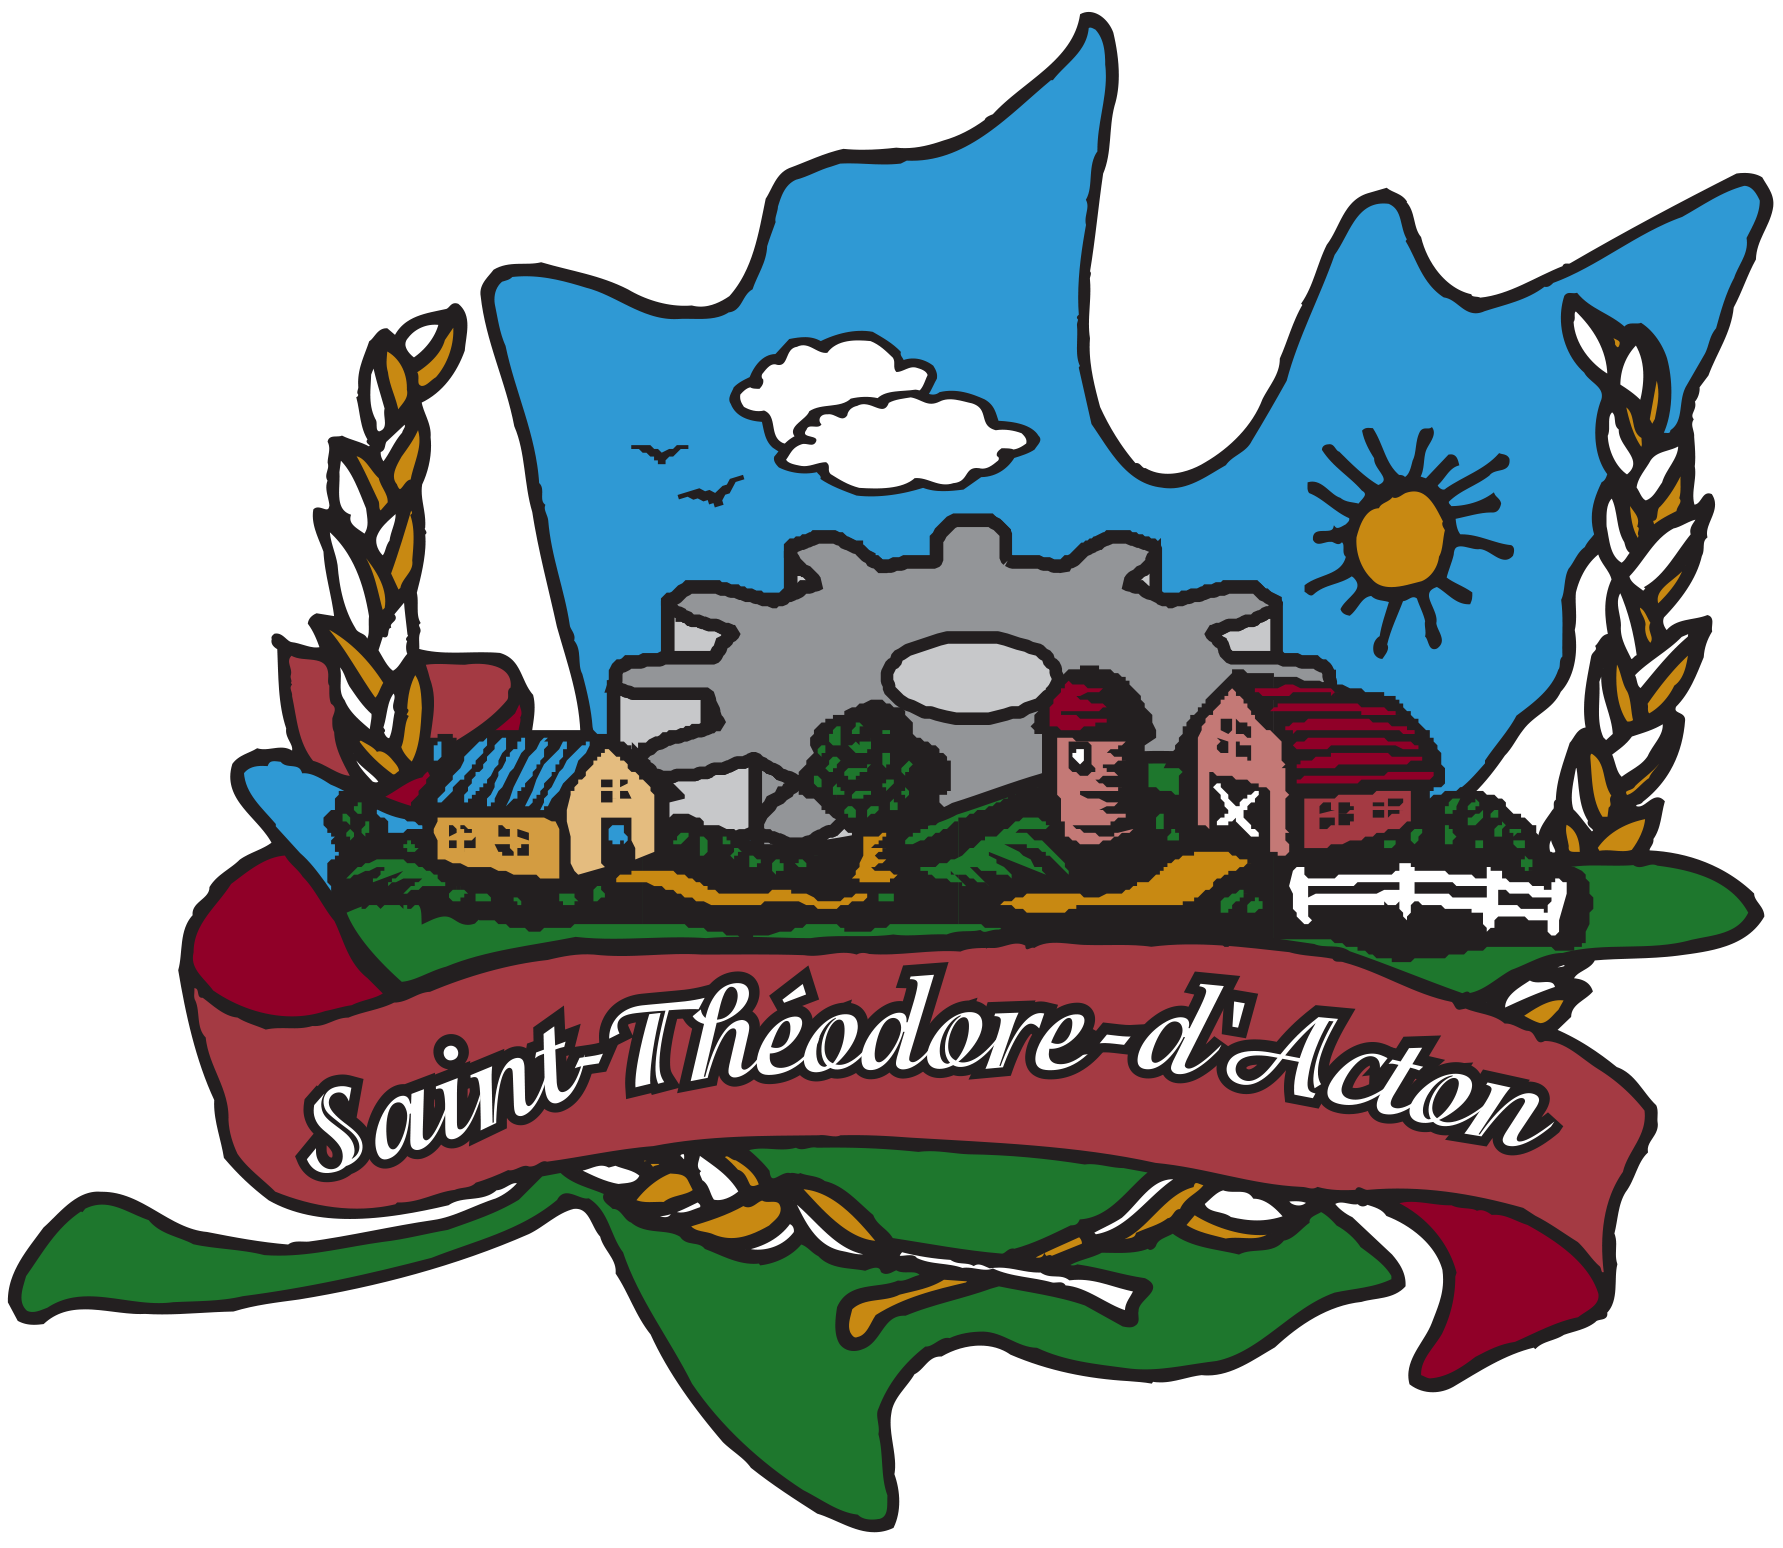 Saint-Th�odore-d'Acton - logo